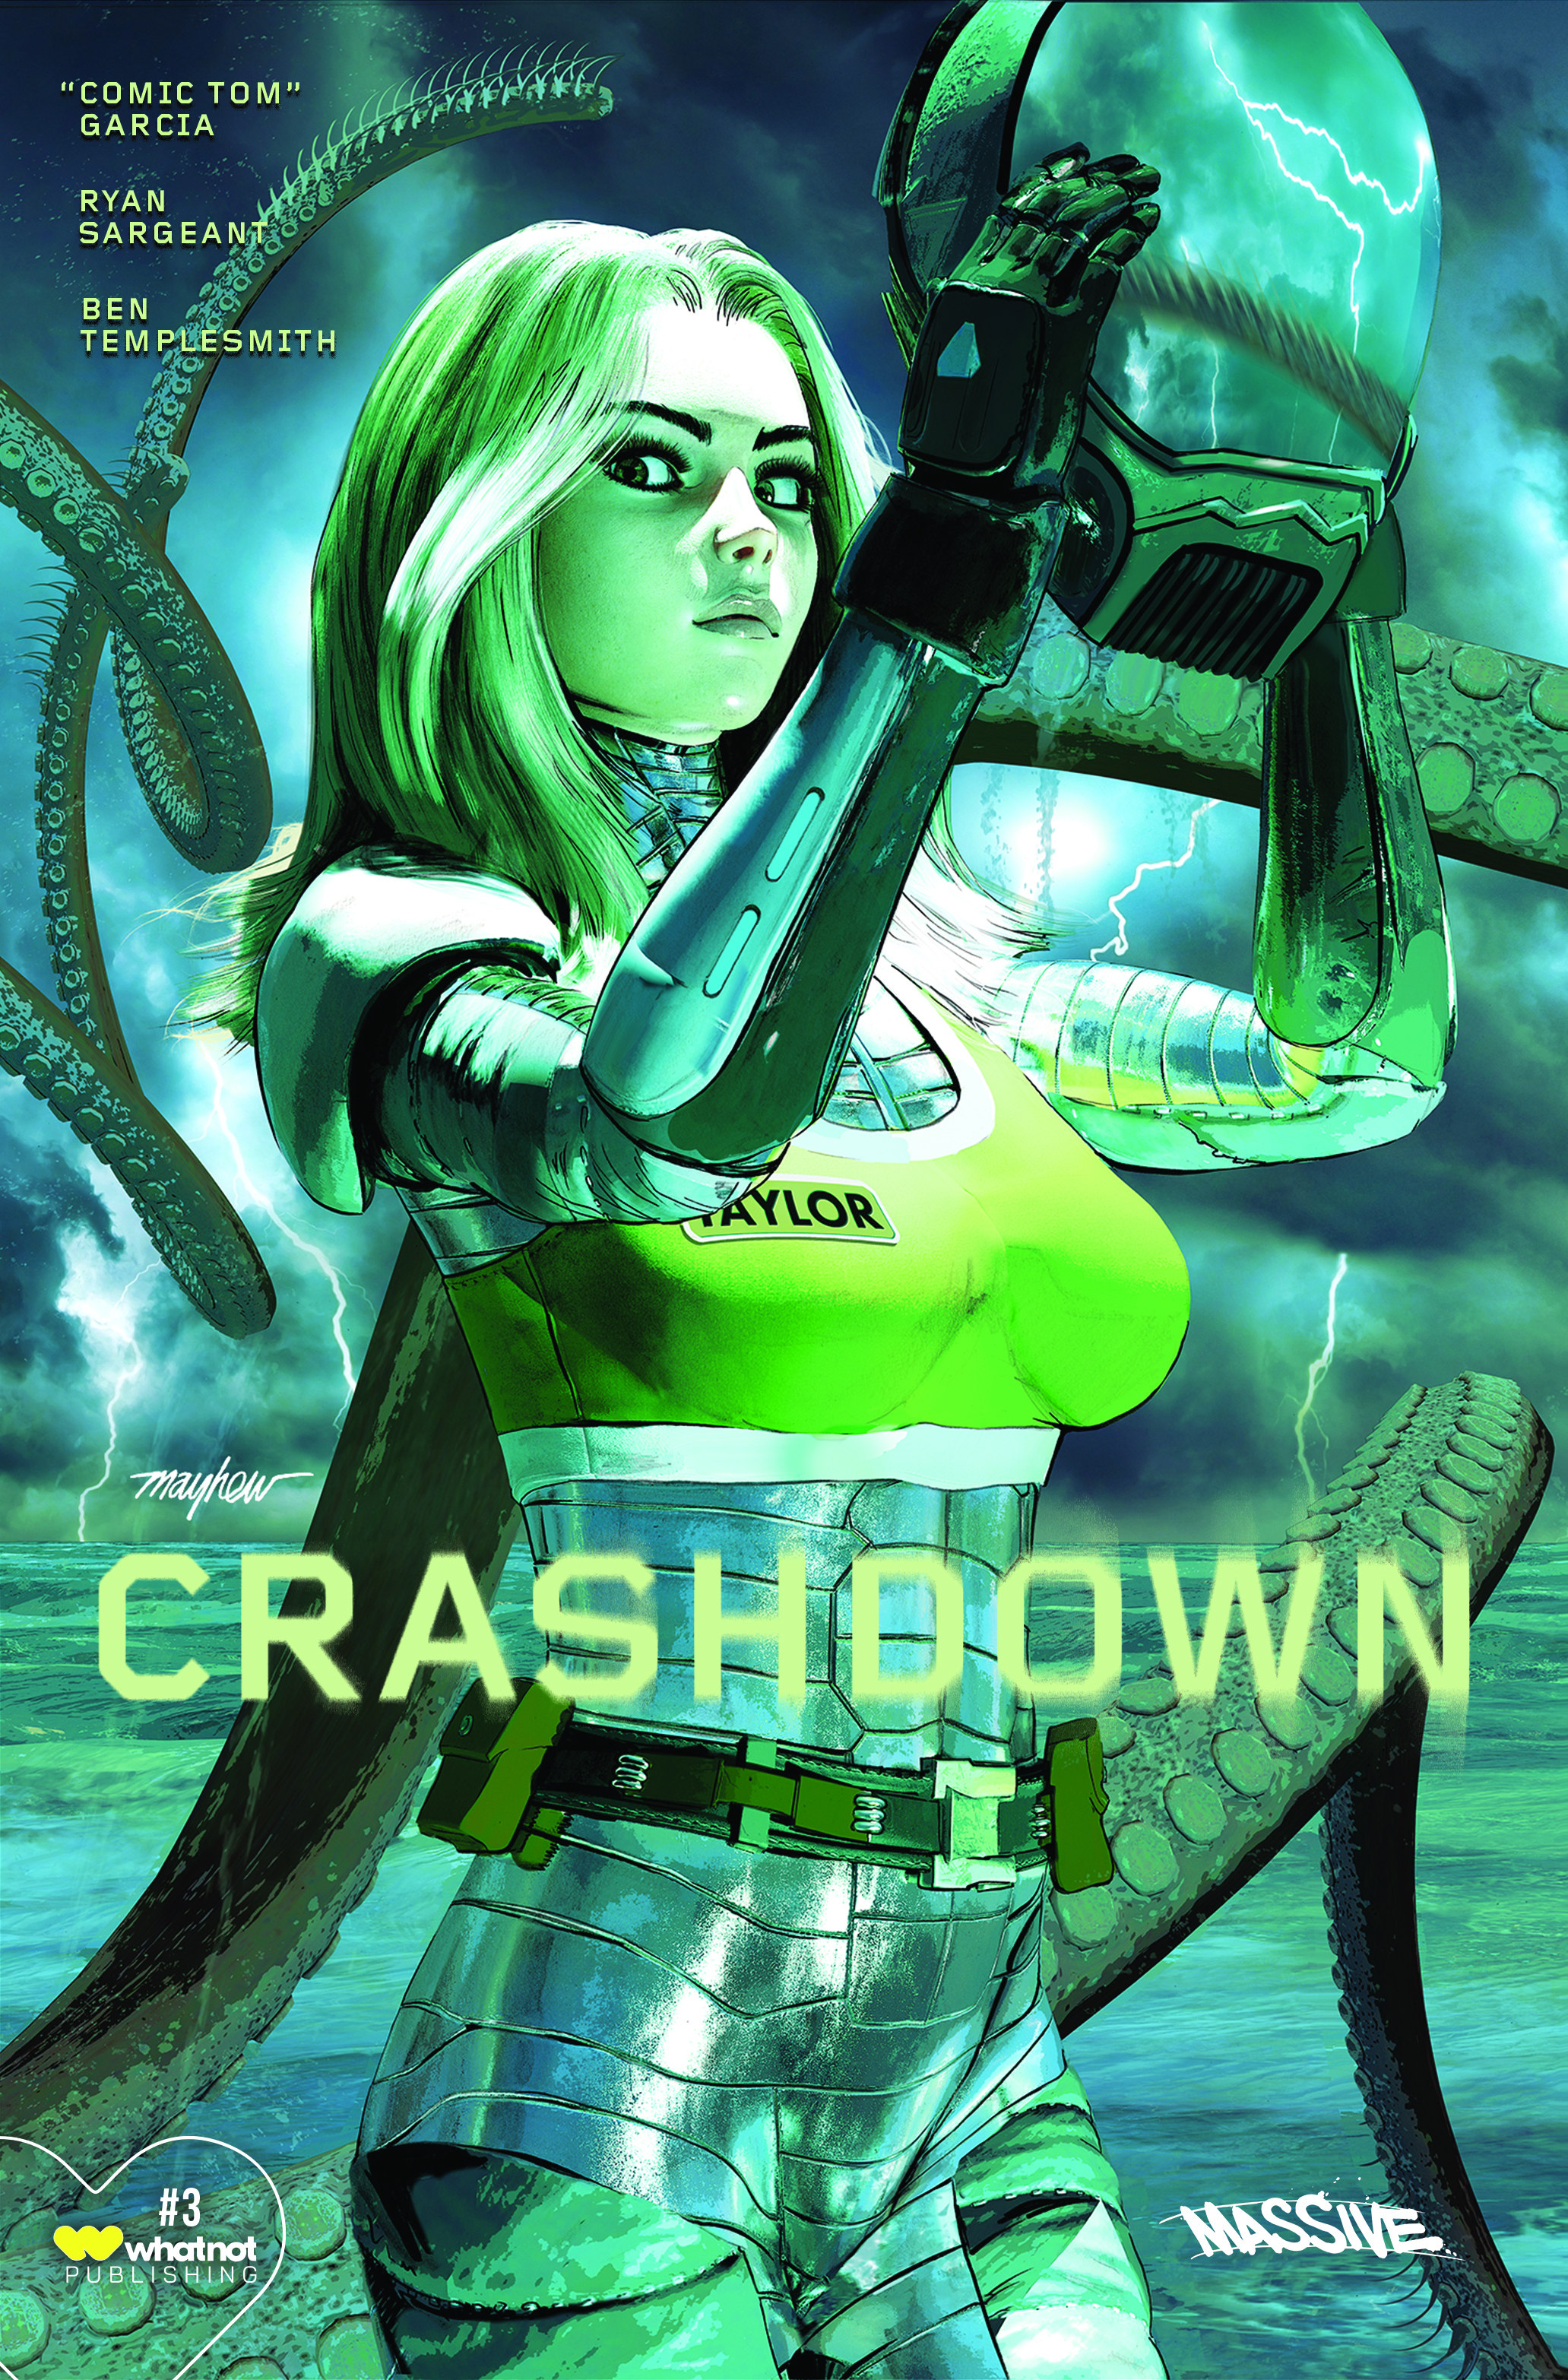 Crashdown #3 Cover B Mayhew (Mature) (Of 3)